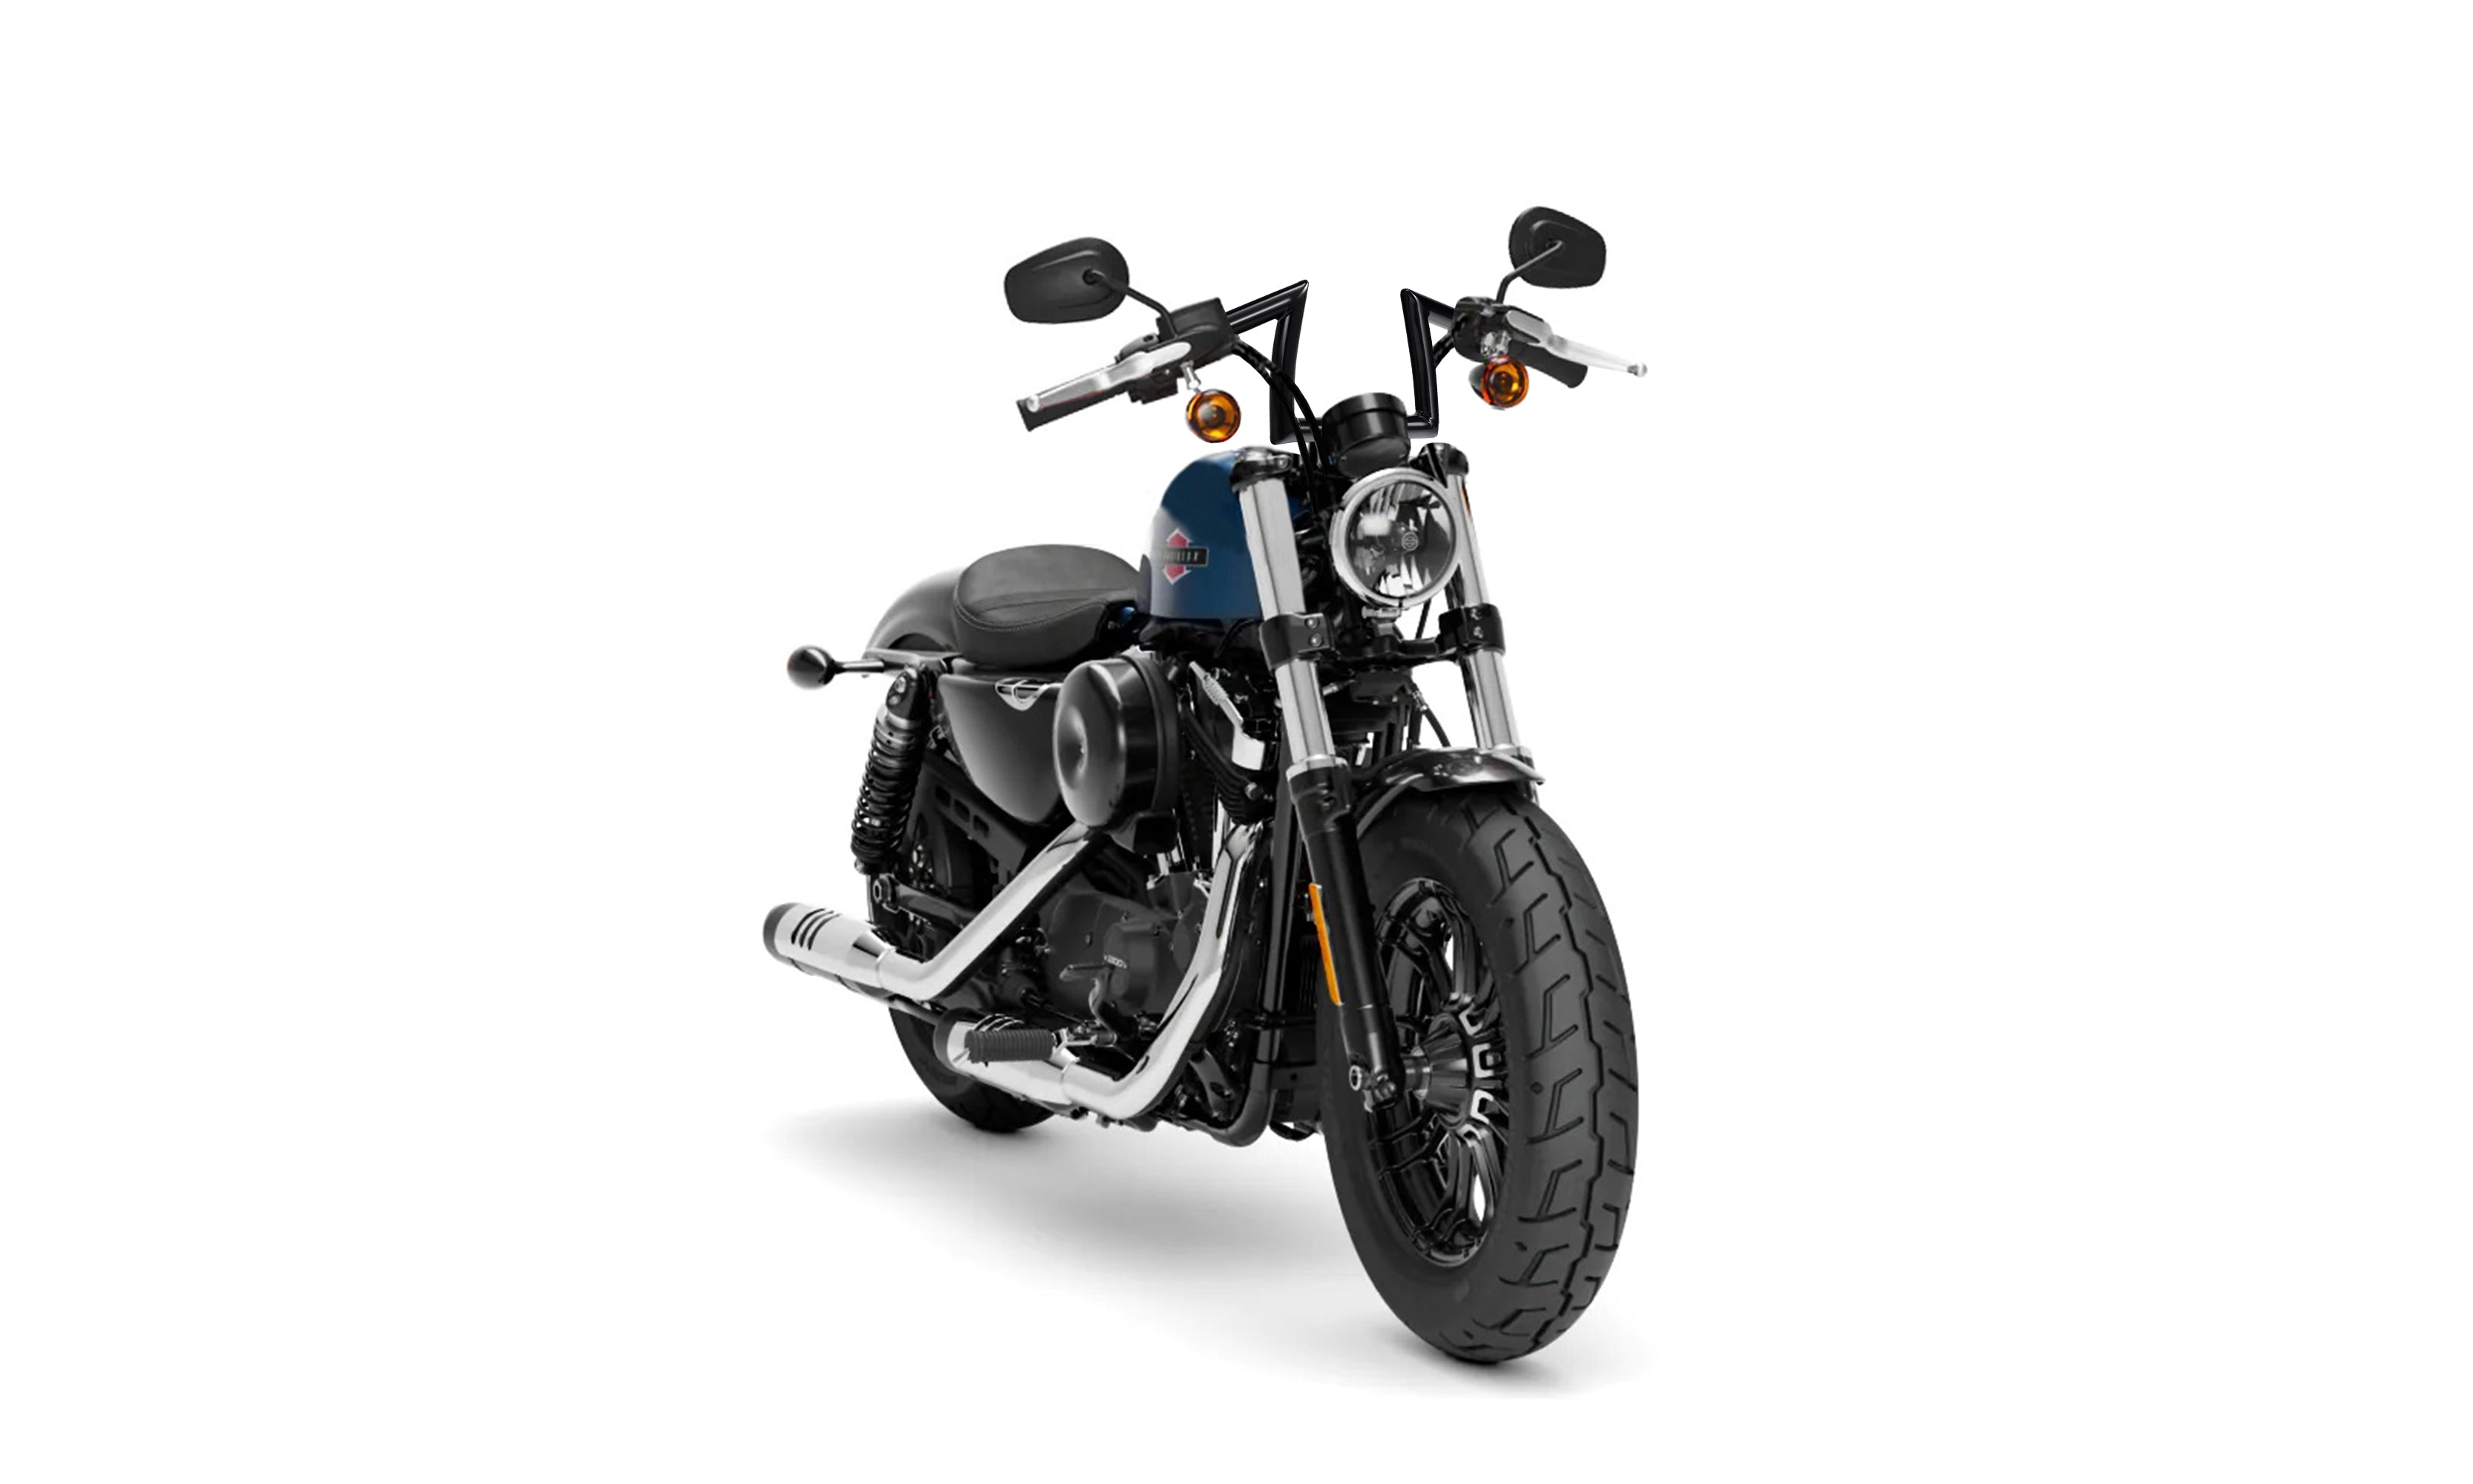 Viking Iron Born Z Handlebar For Harley Sportster Forty Eight Gloss Black Bag on Bike View @expand